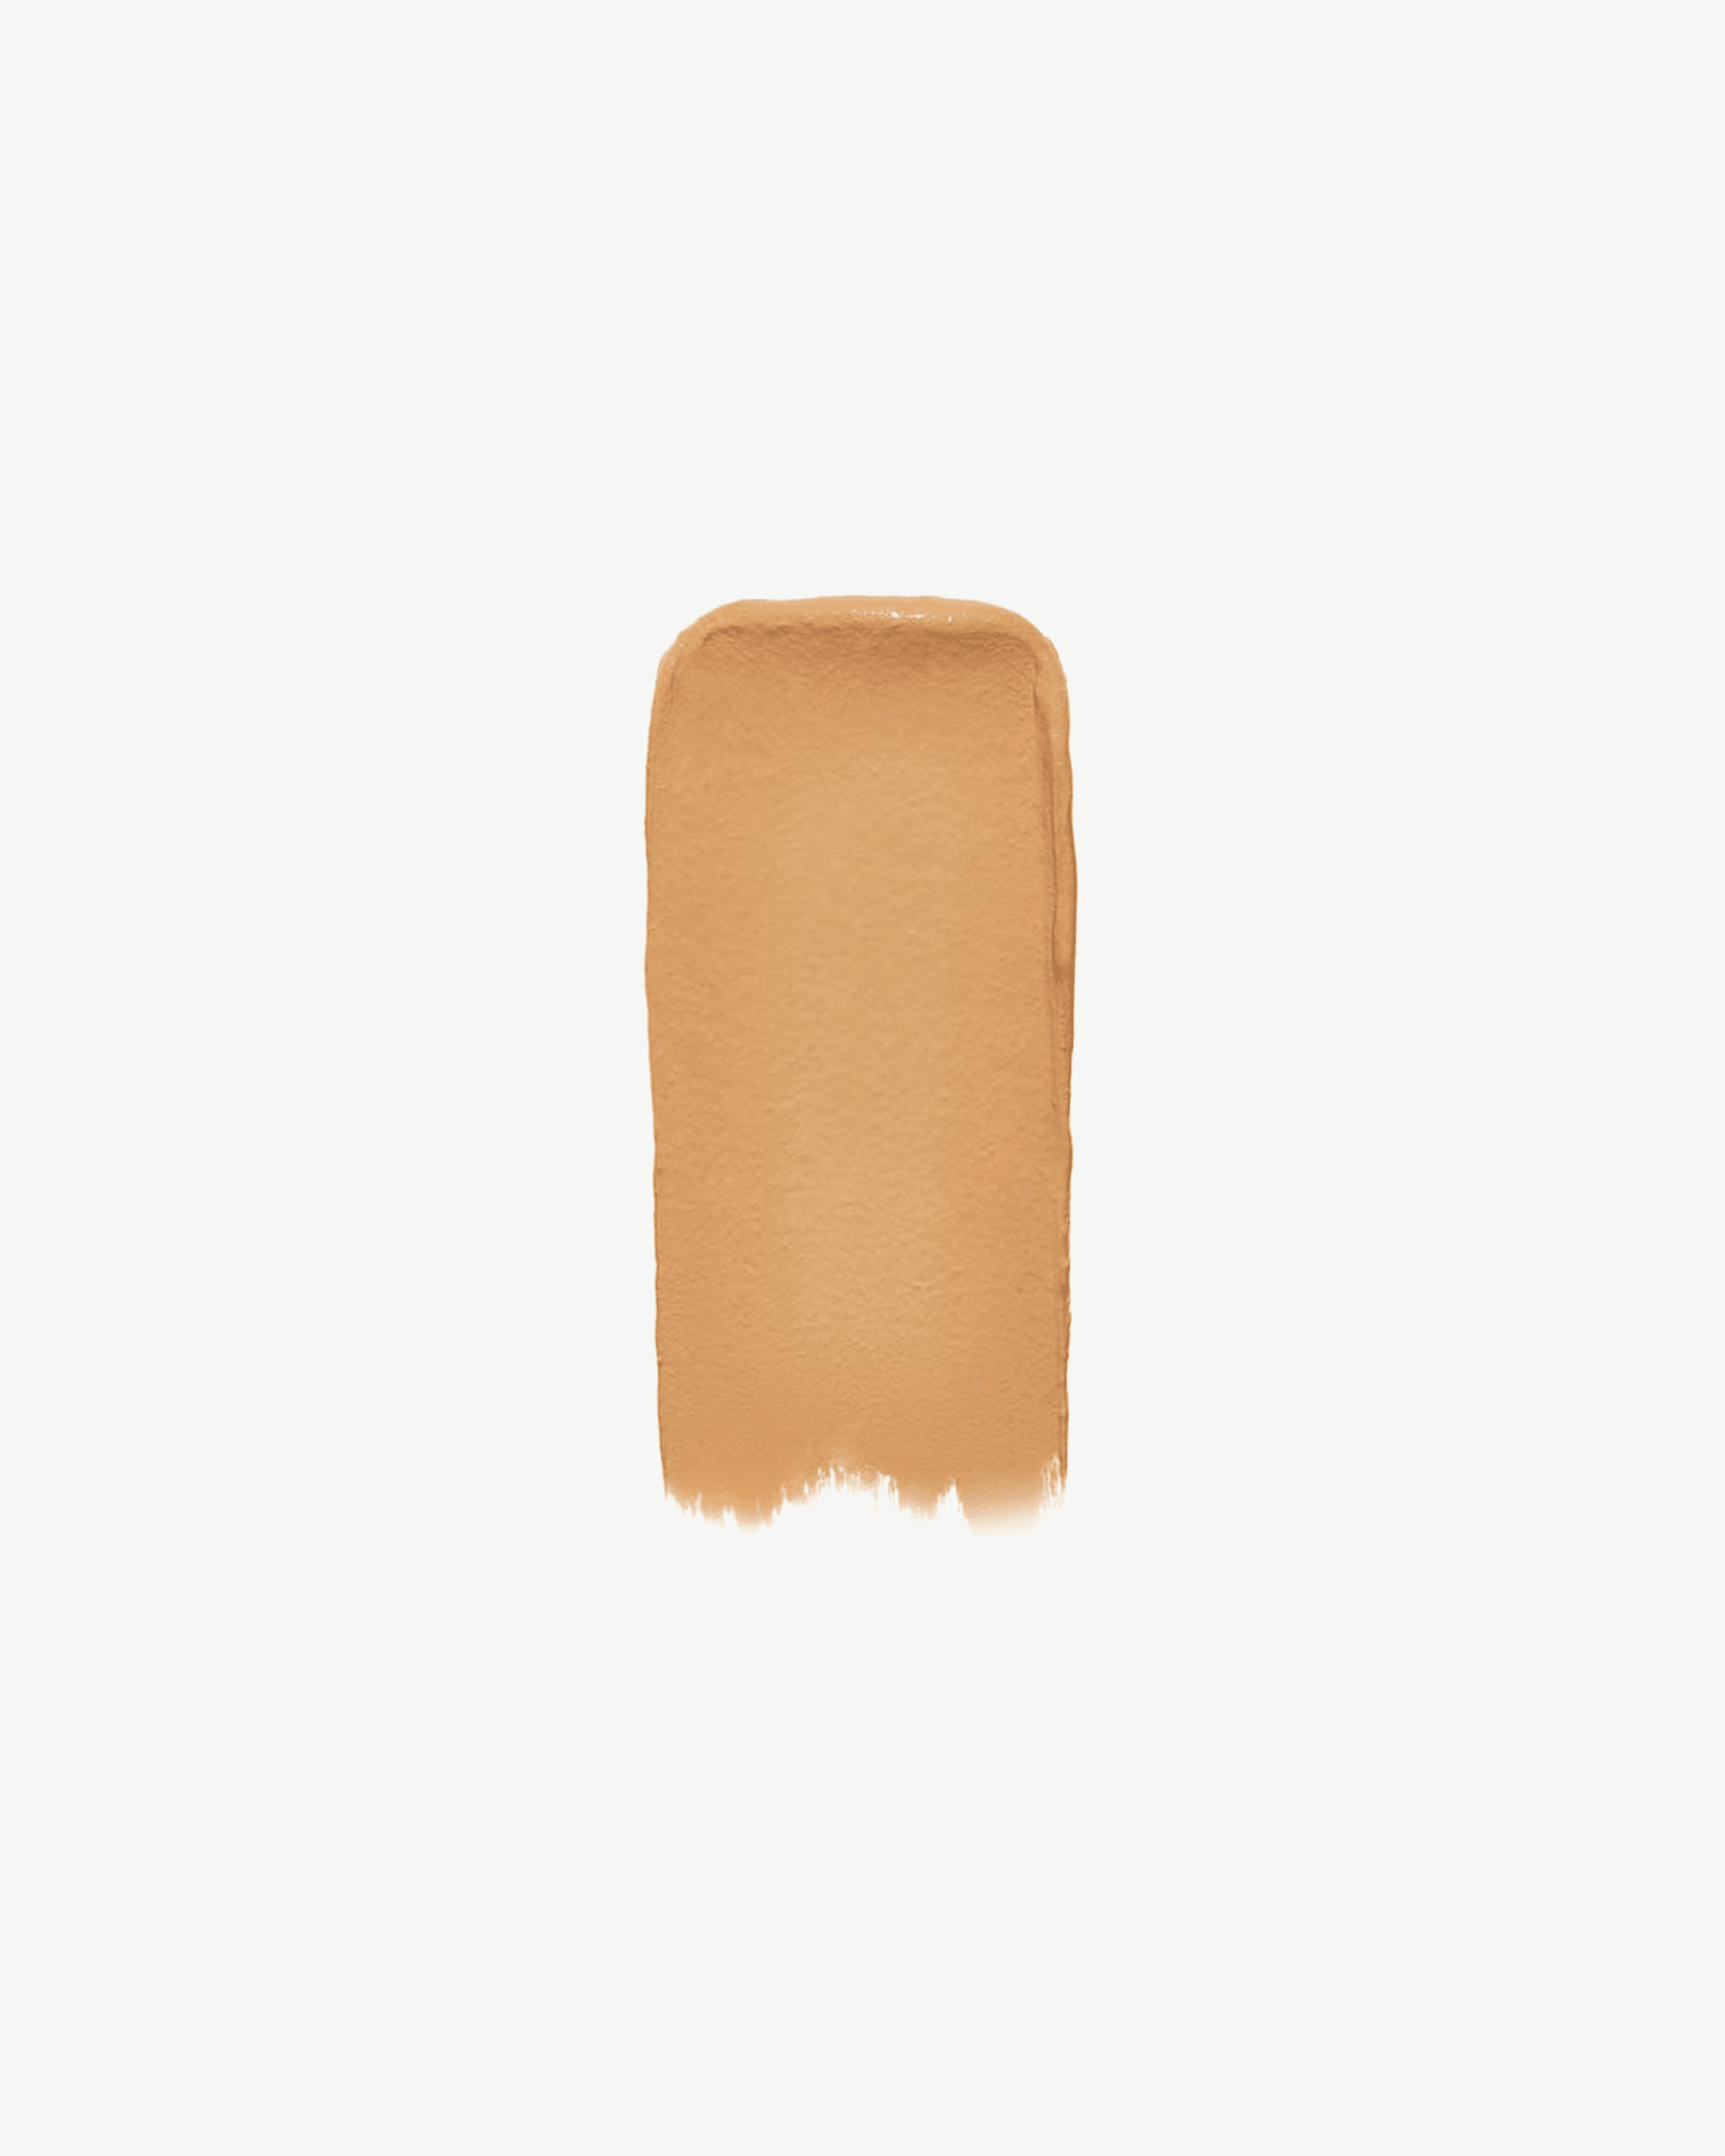 Shade 44 (for medium-tan skin with warm undertones)